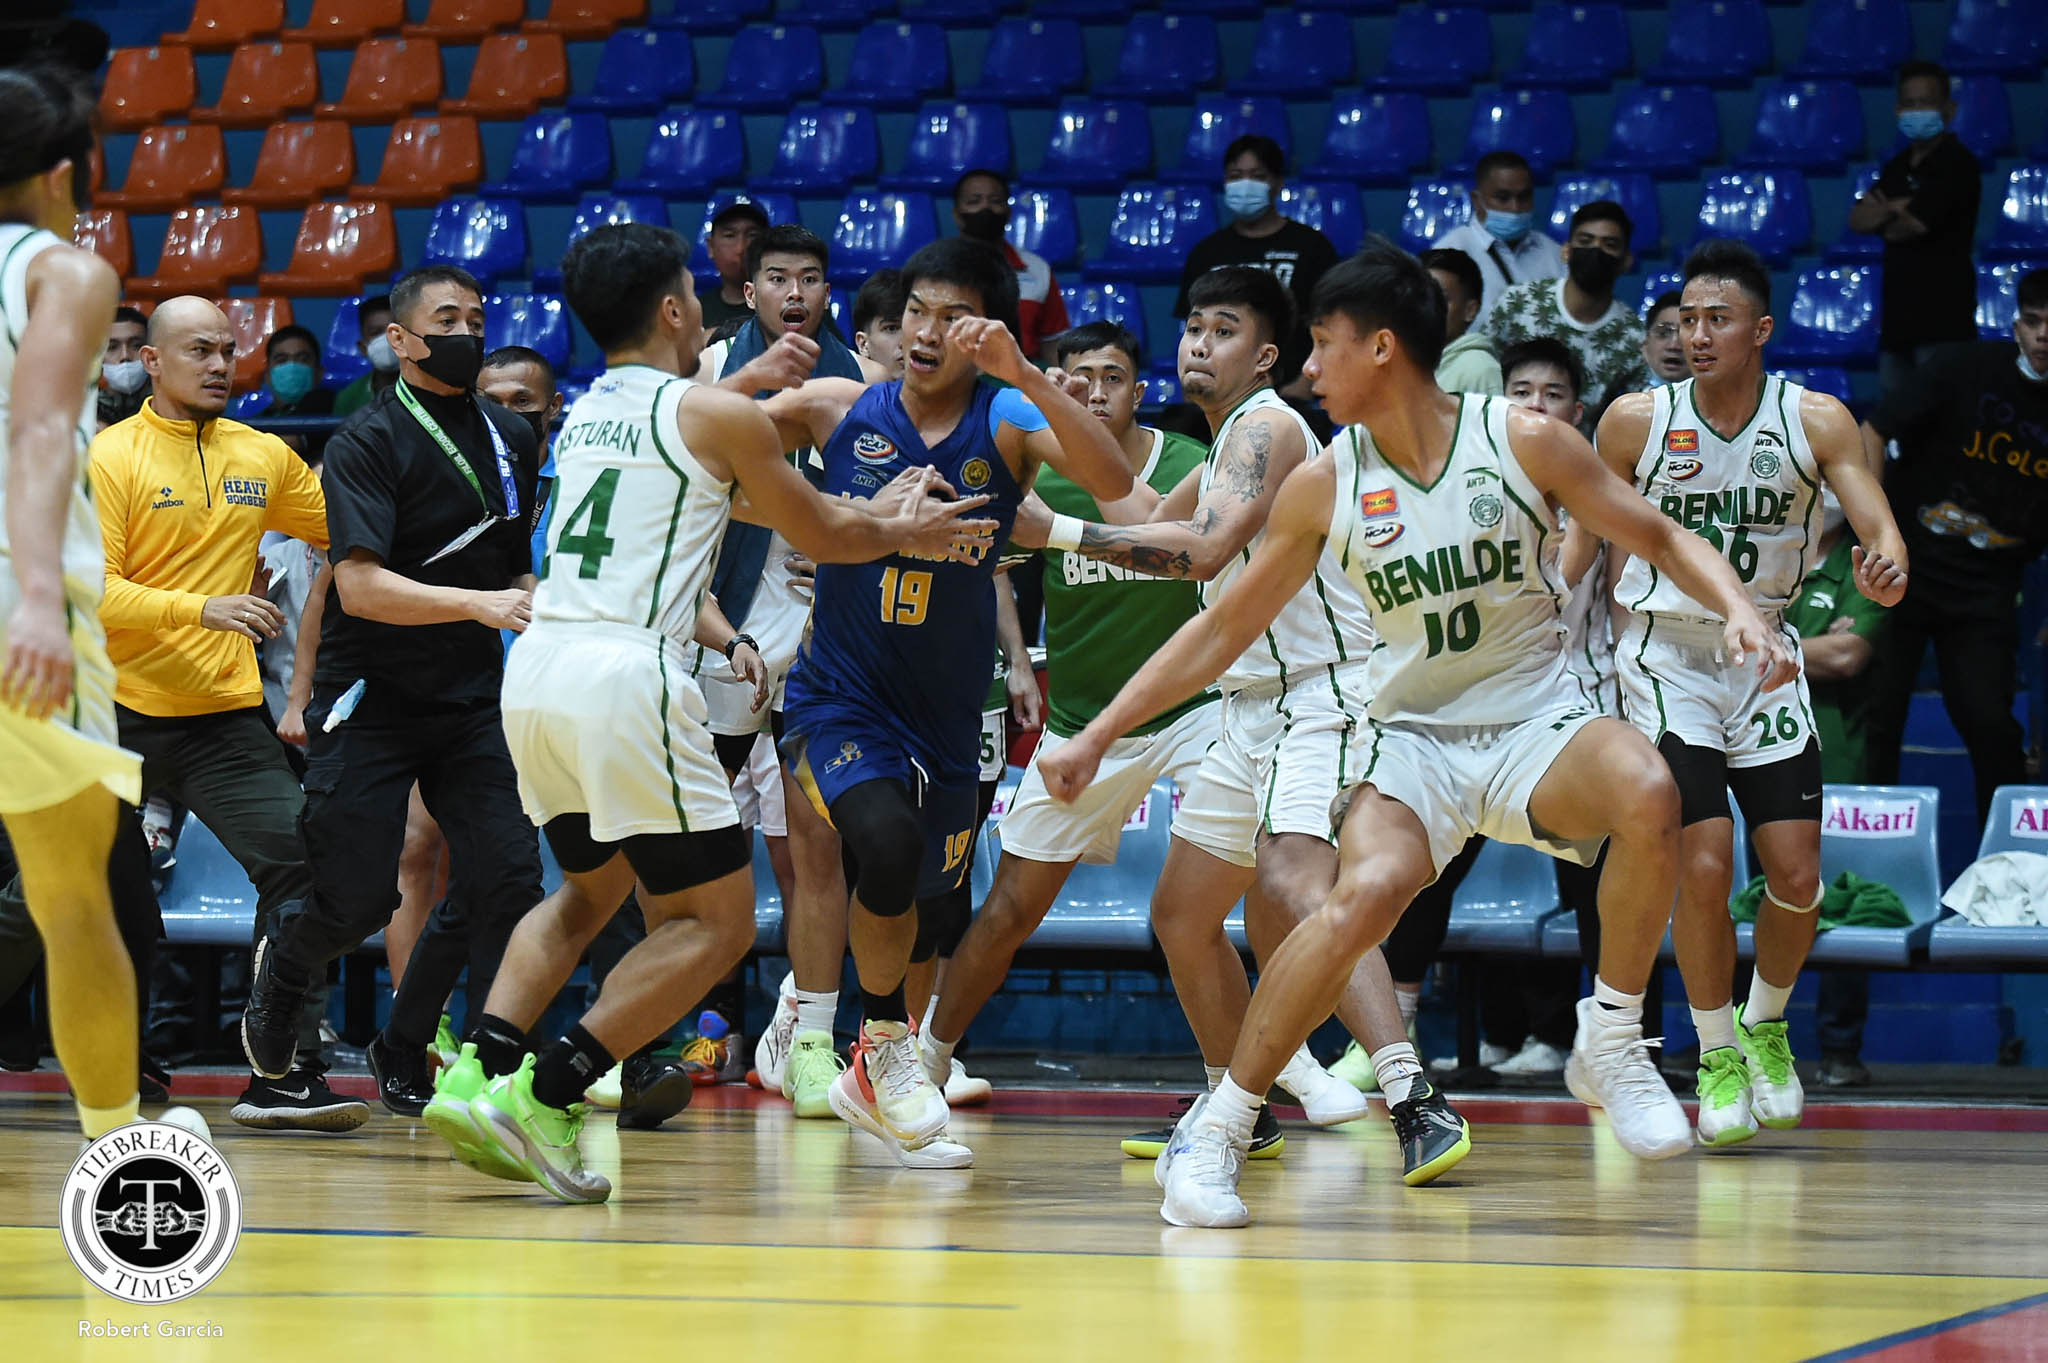 NCAA-Season-98-JRU-vs-Benilde-Fight-6 Gonzalez hopes Amores gets life in order first before thinking of basketball return Basketball JRU NCAA News  - philippine sports news